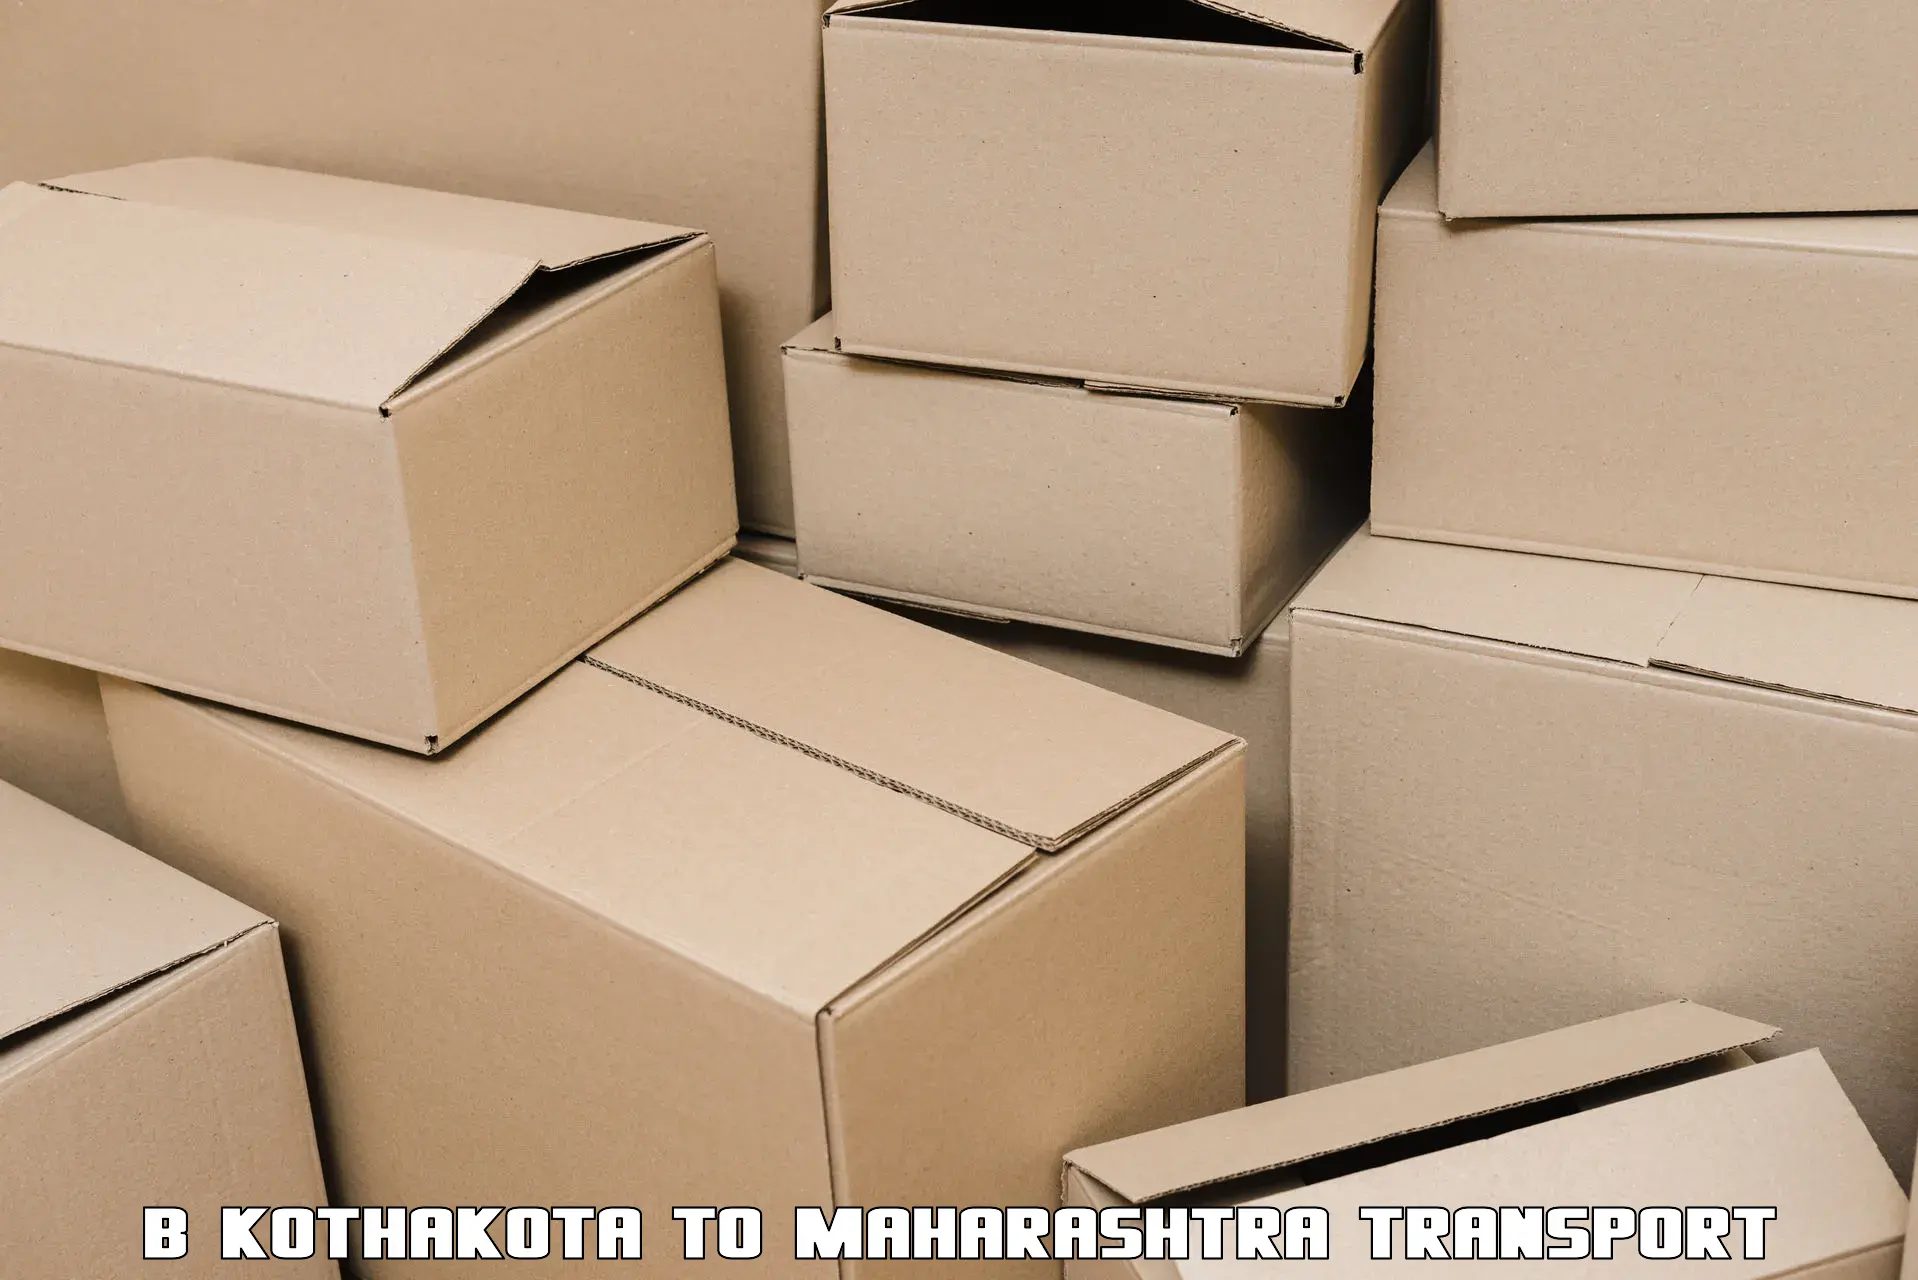 Scooty parcel B Kothakota to Chandrapur